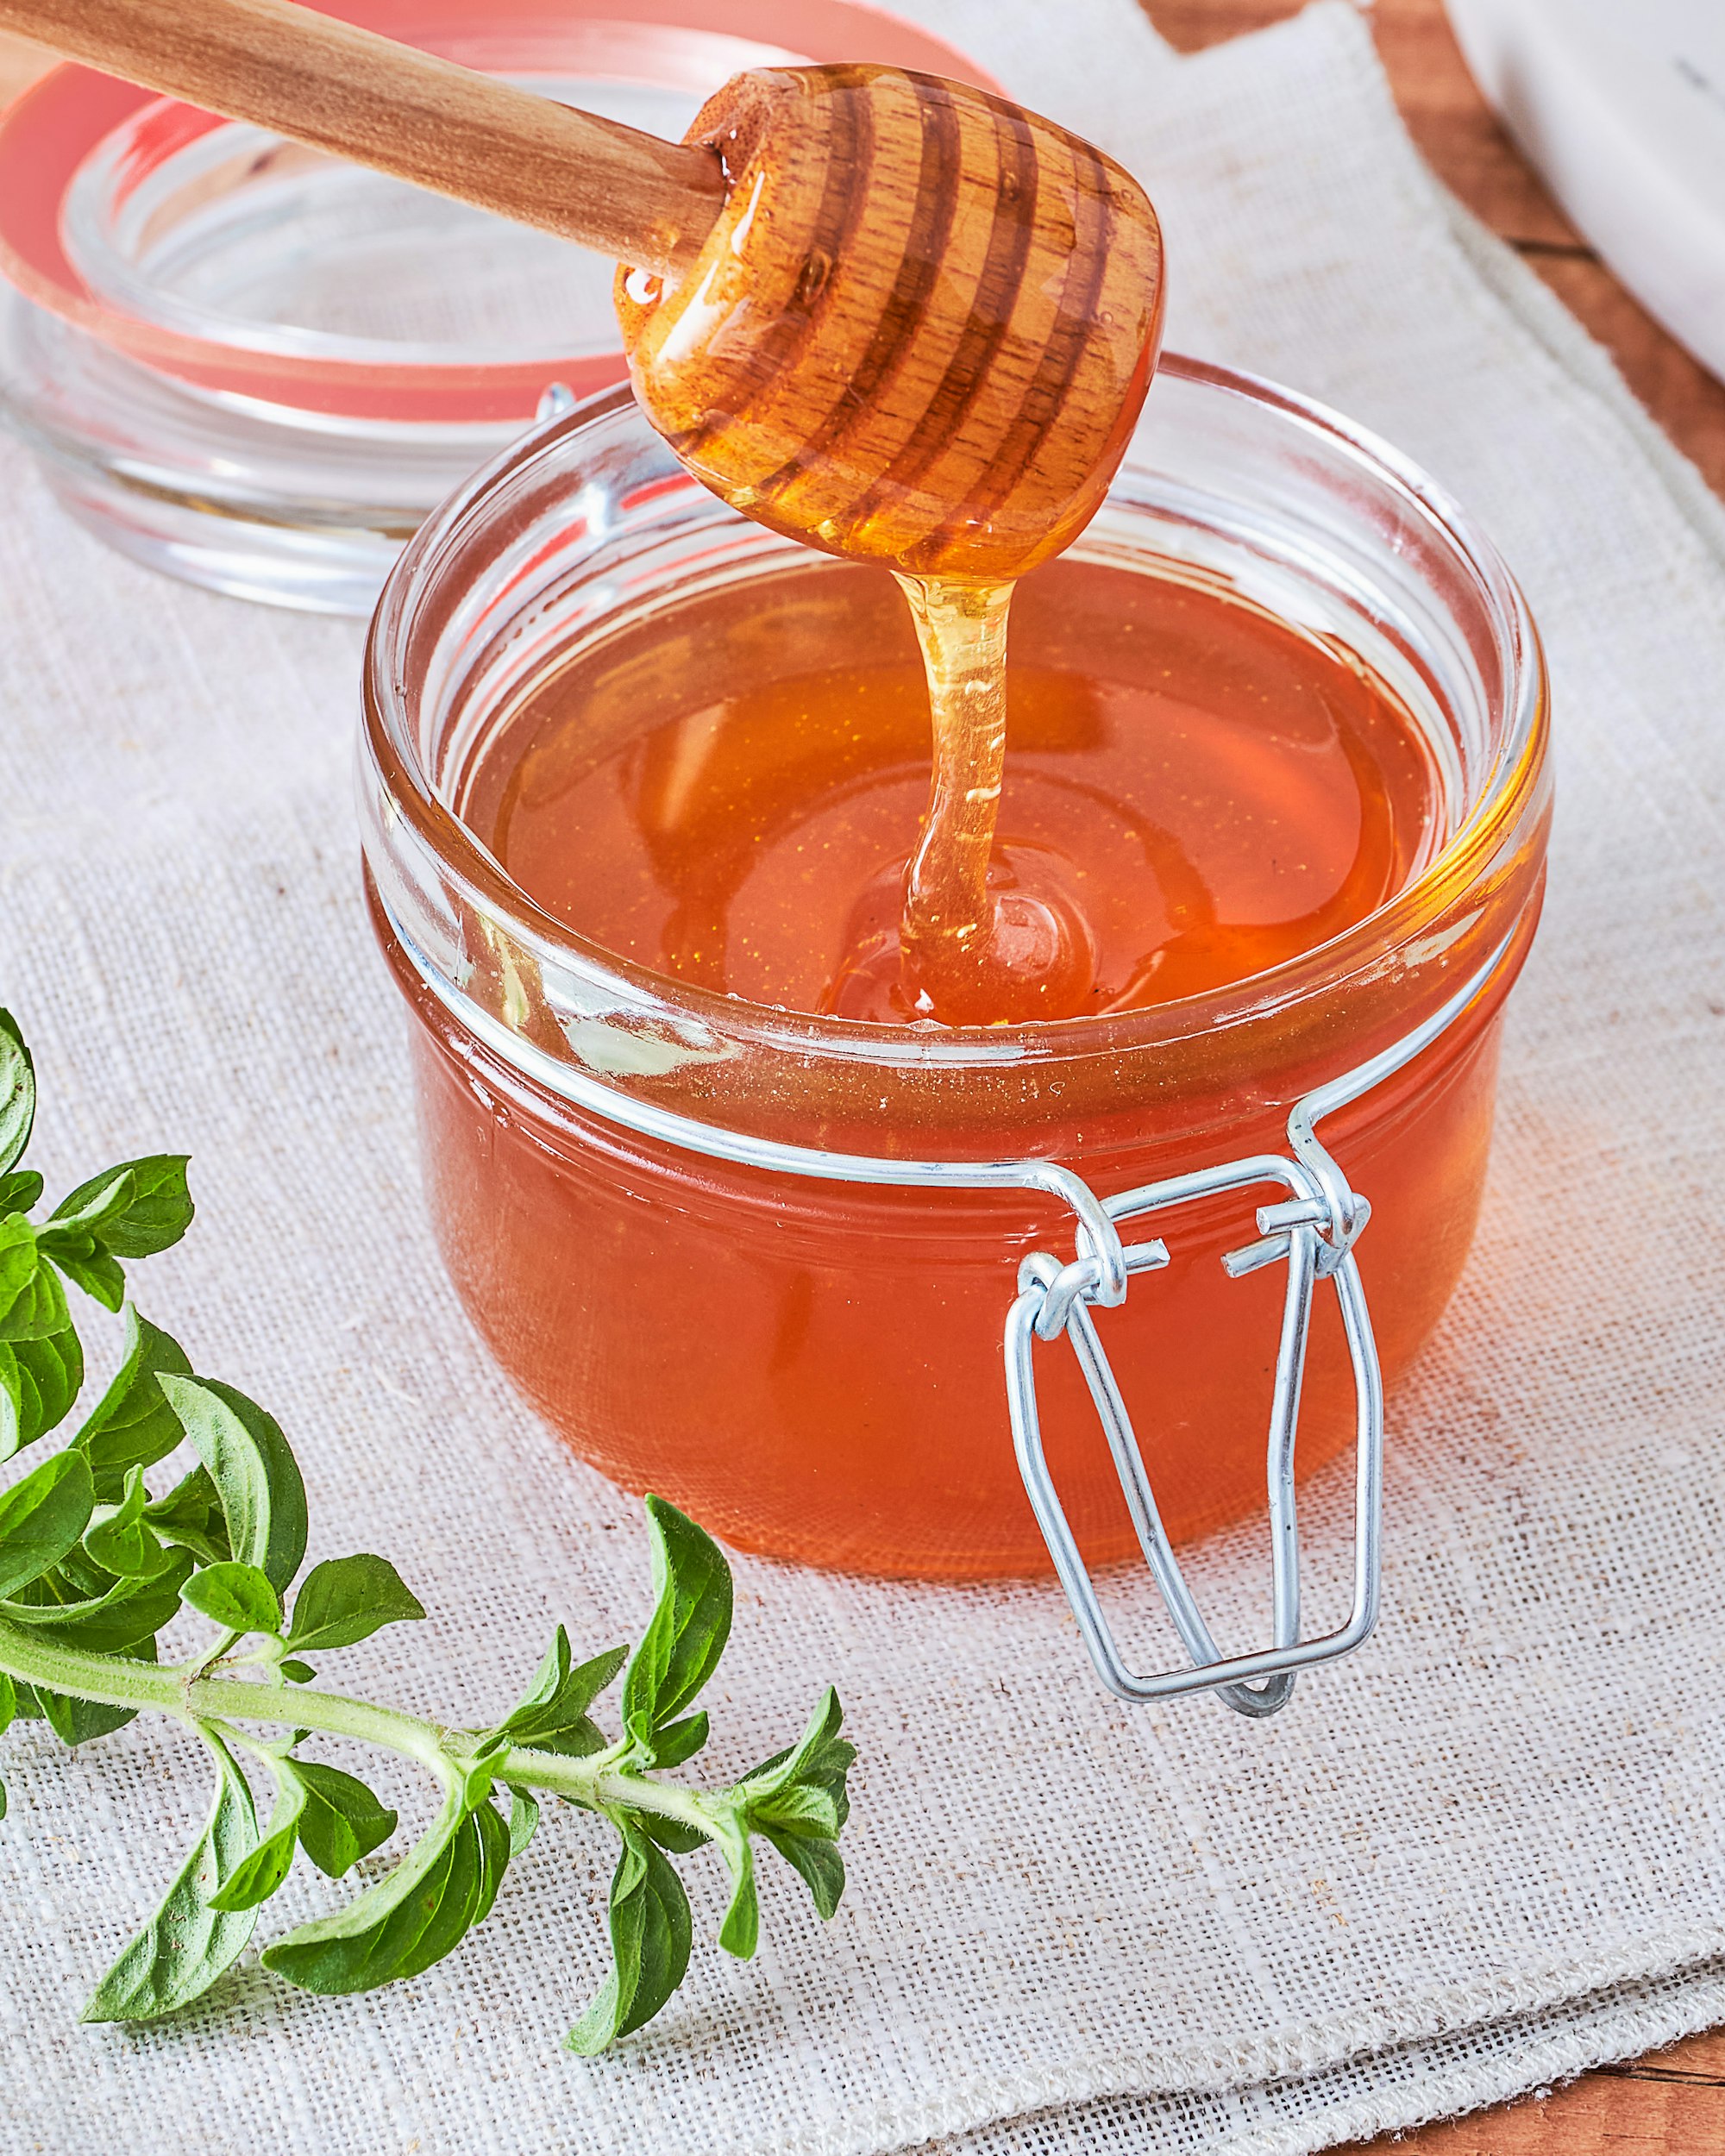 Honey jar with dipper